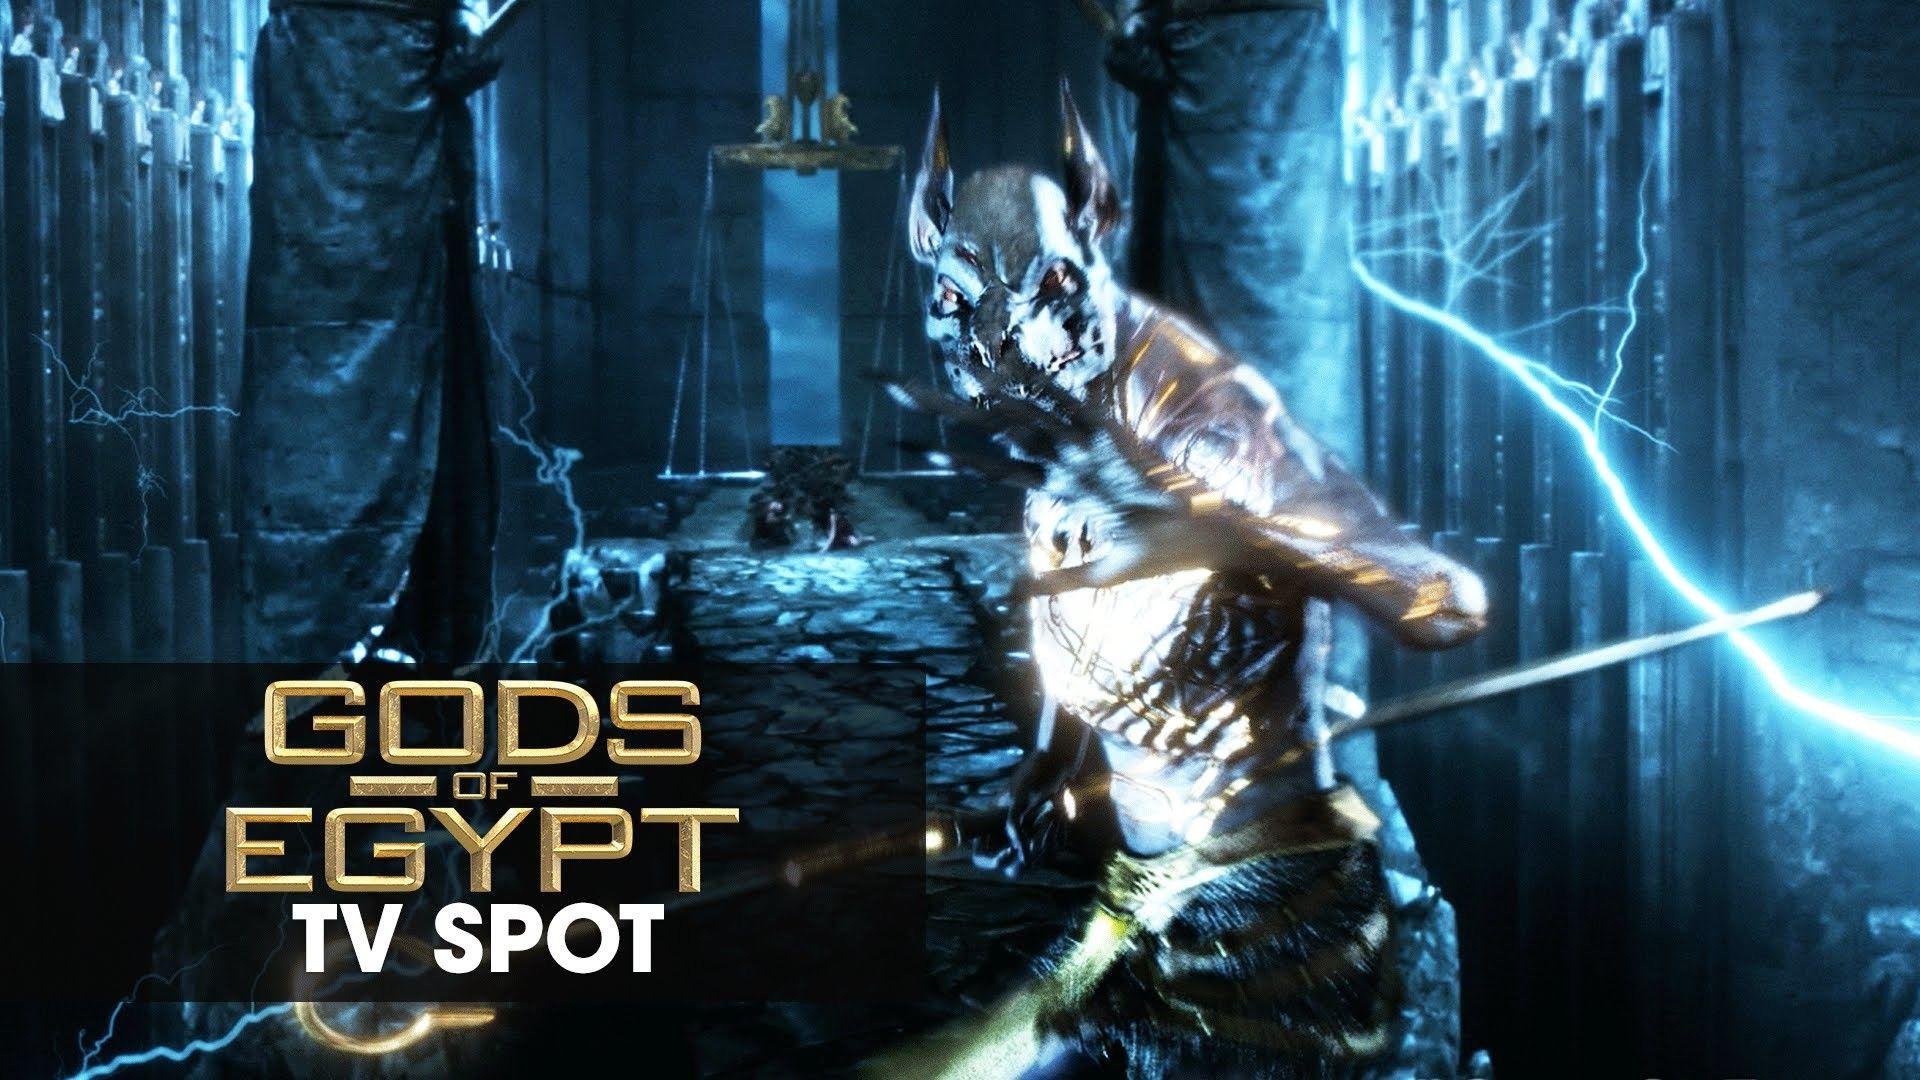 gods of egypt 2 full movie free download